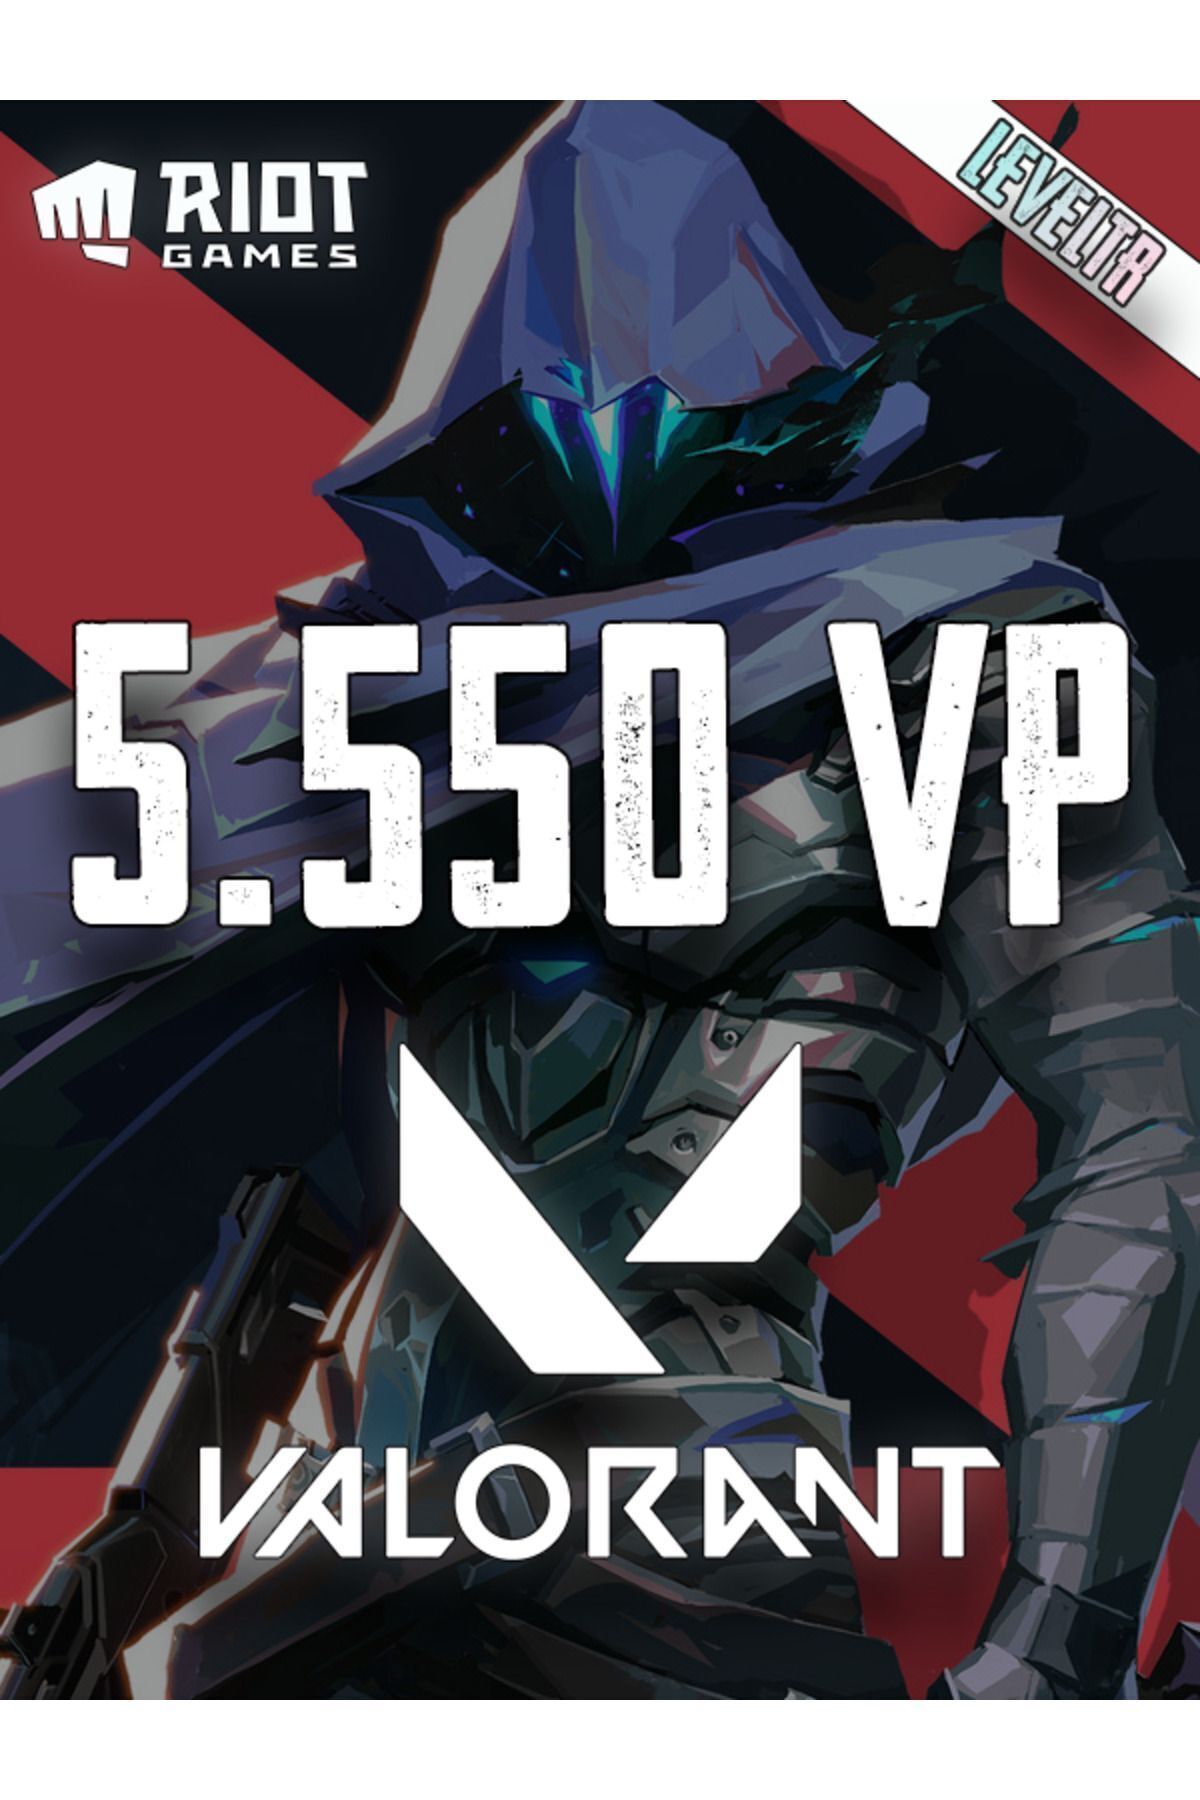 Valorant 5550 Vp - Riot Games